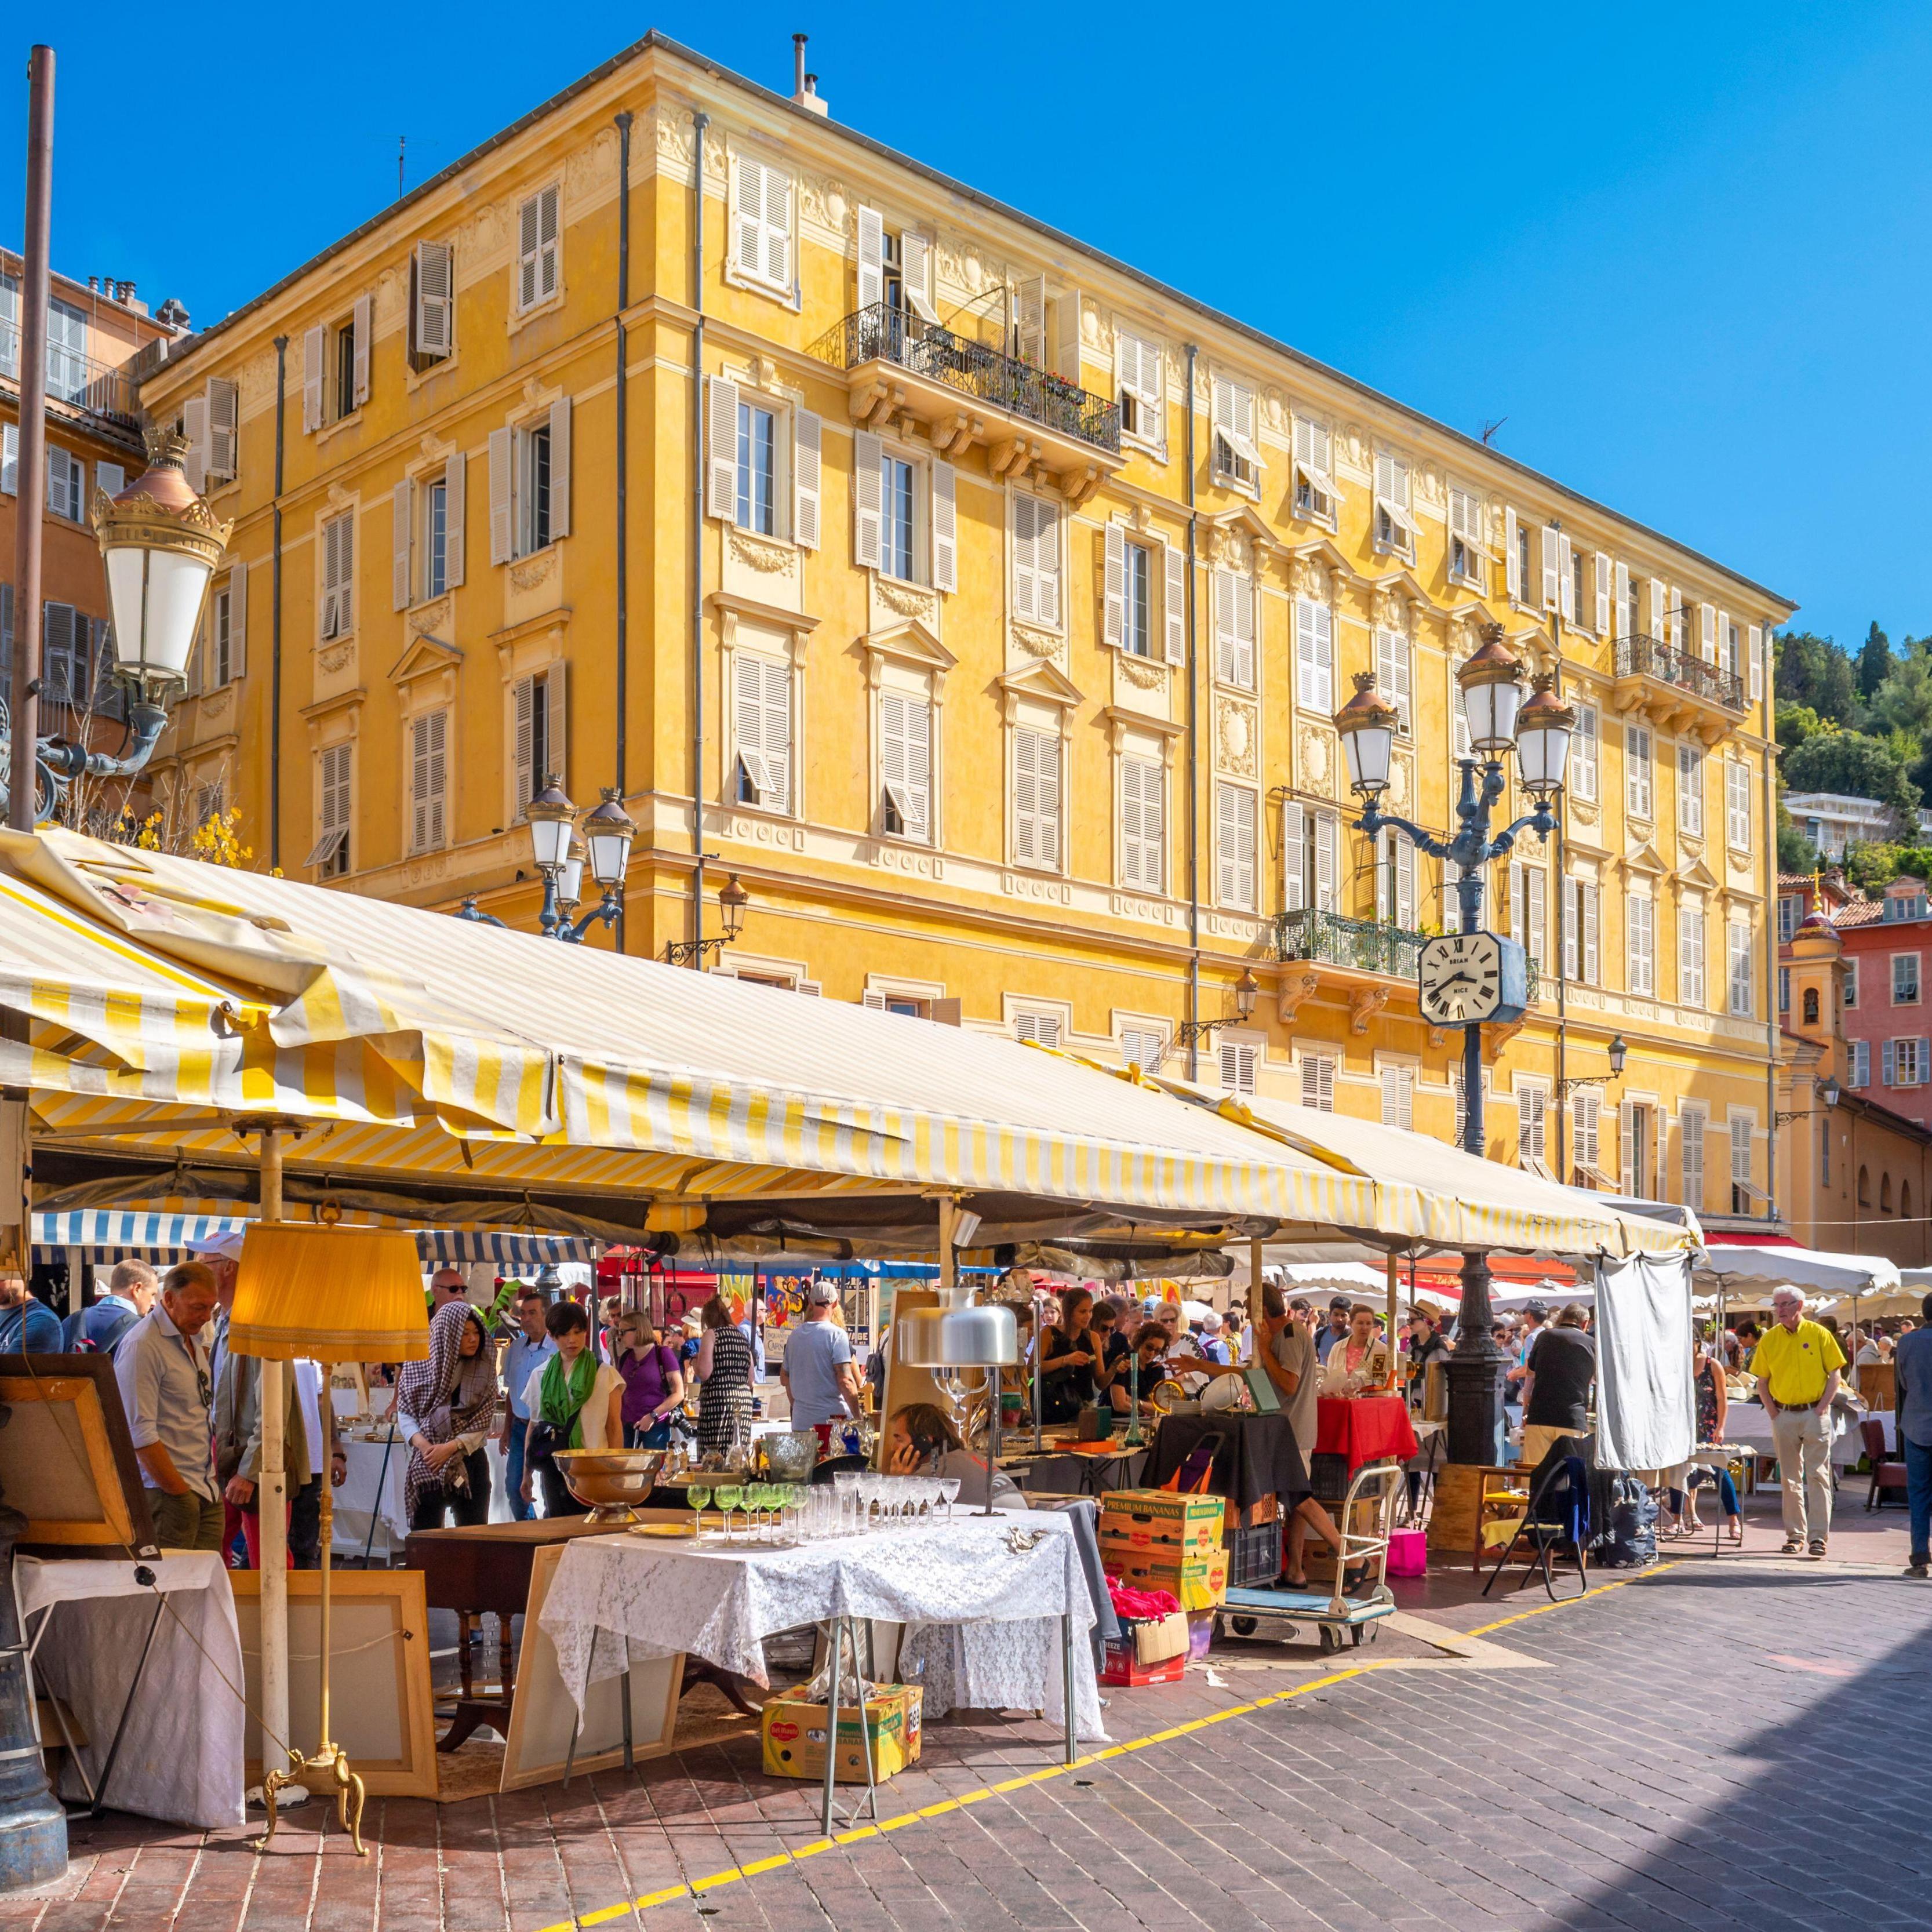 Tourists at Nice’s Cours Saleya flea market